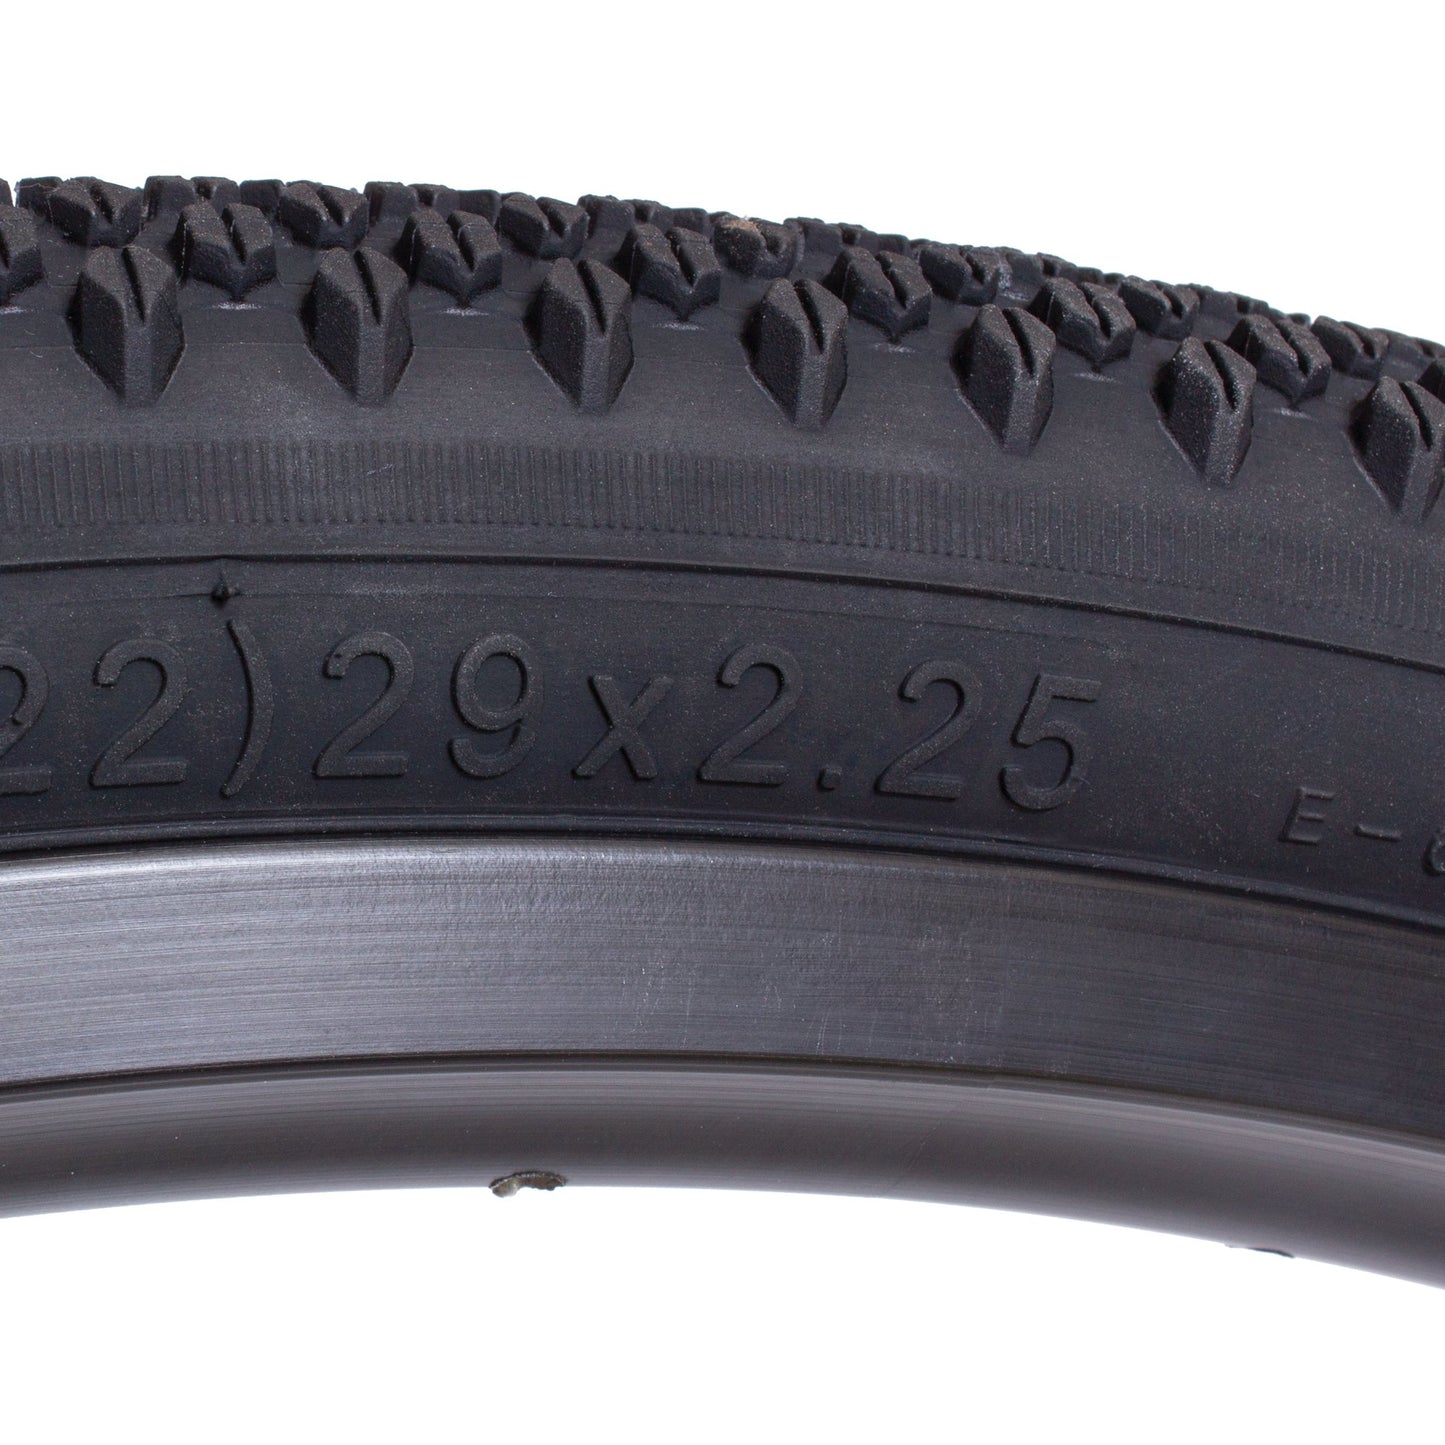 E624 29 inch bike tires black